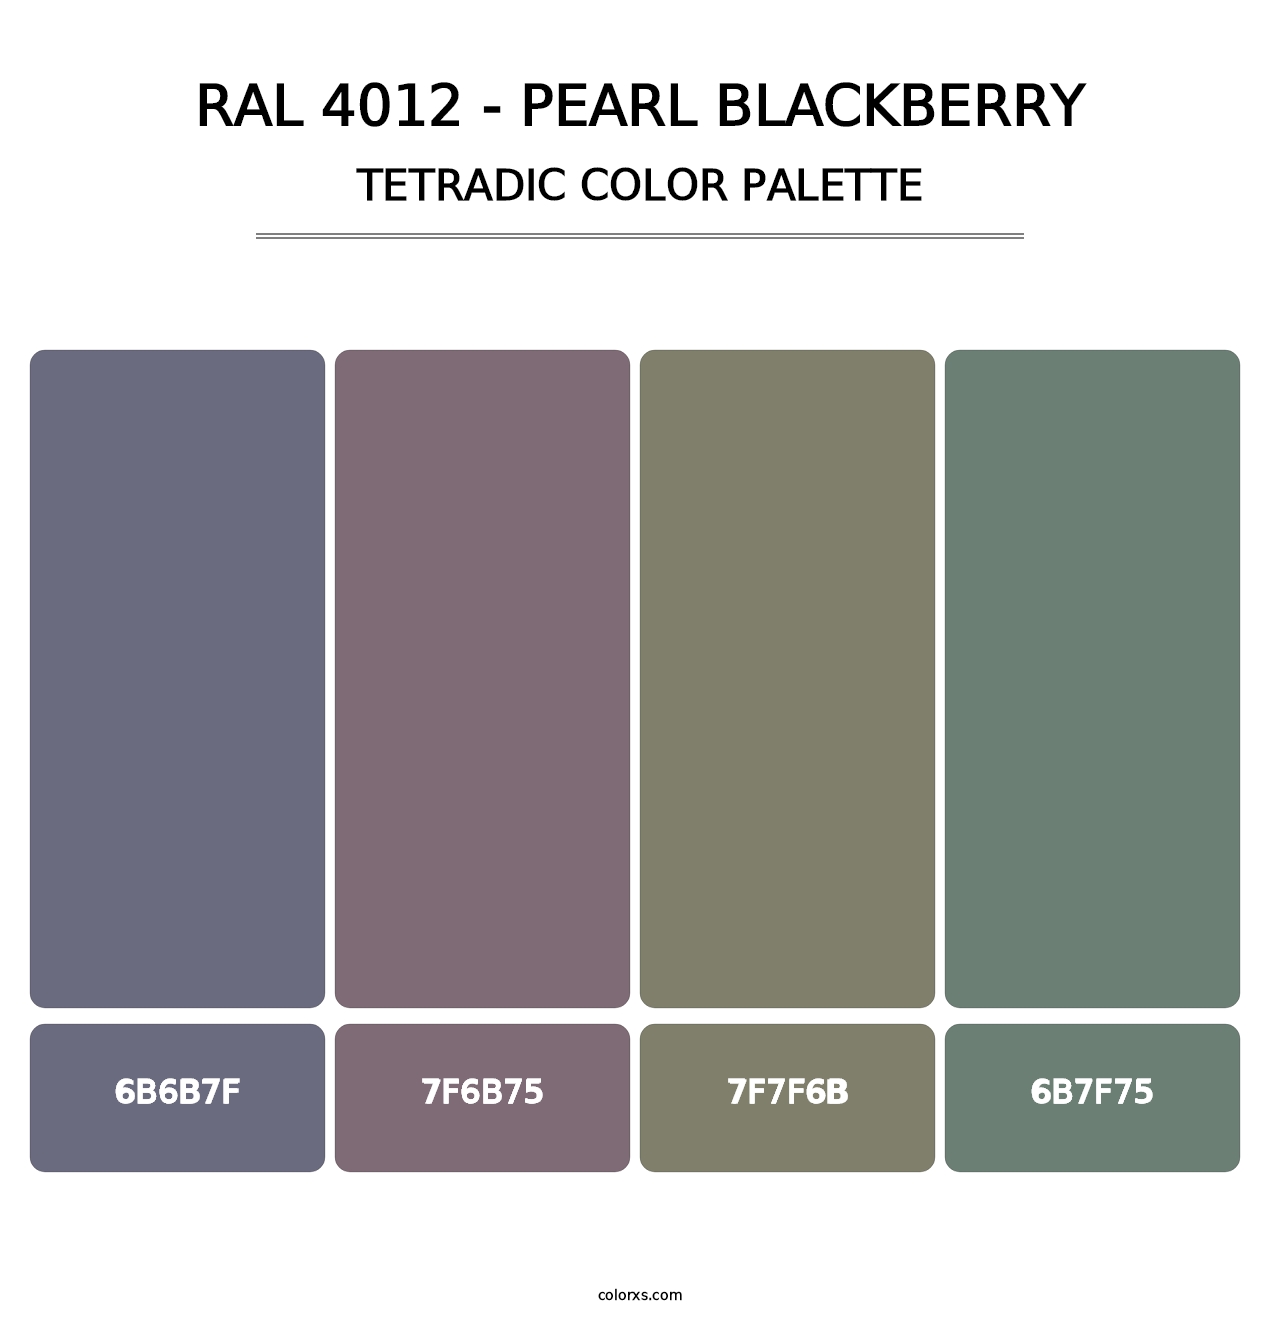 RAL 4012 - Pearl Blackberry - Tetradic Color Palette